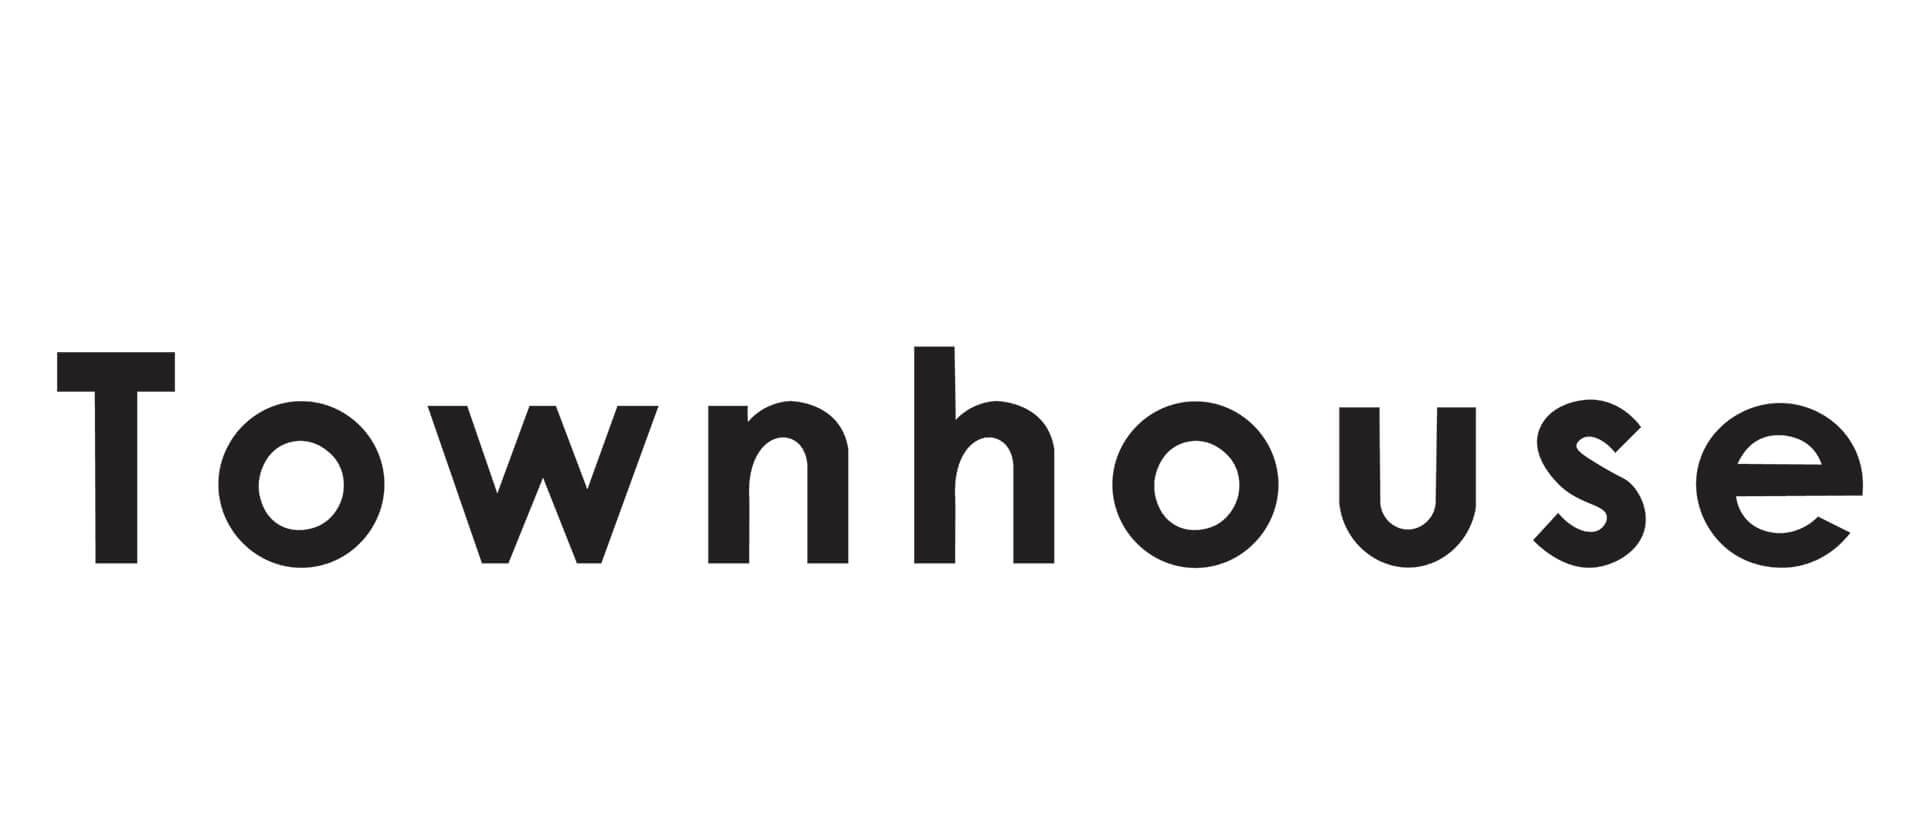 Townhouse Logo - Townhouse